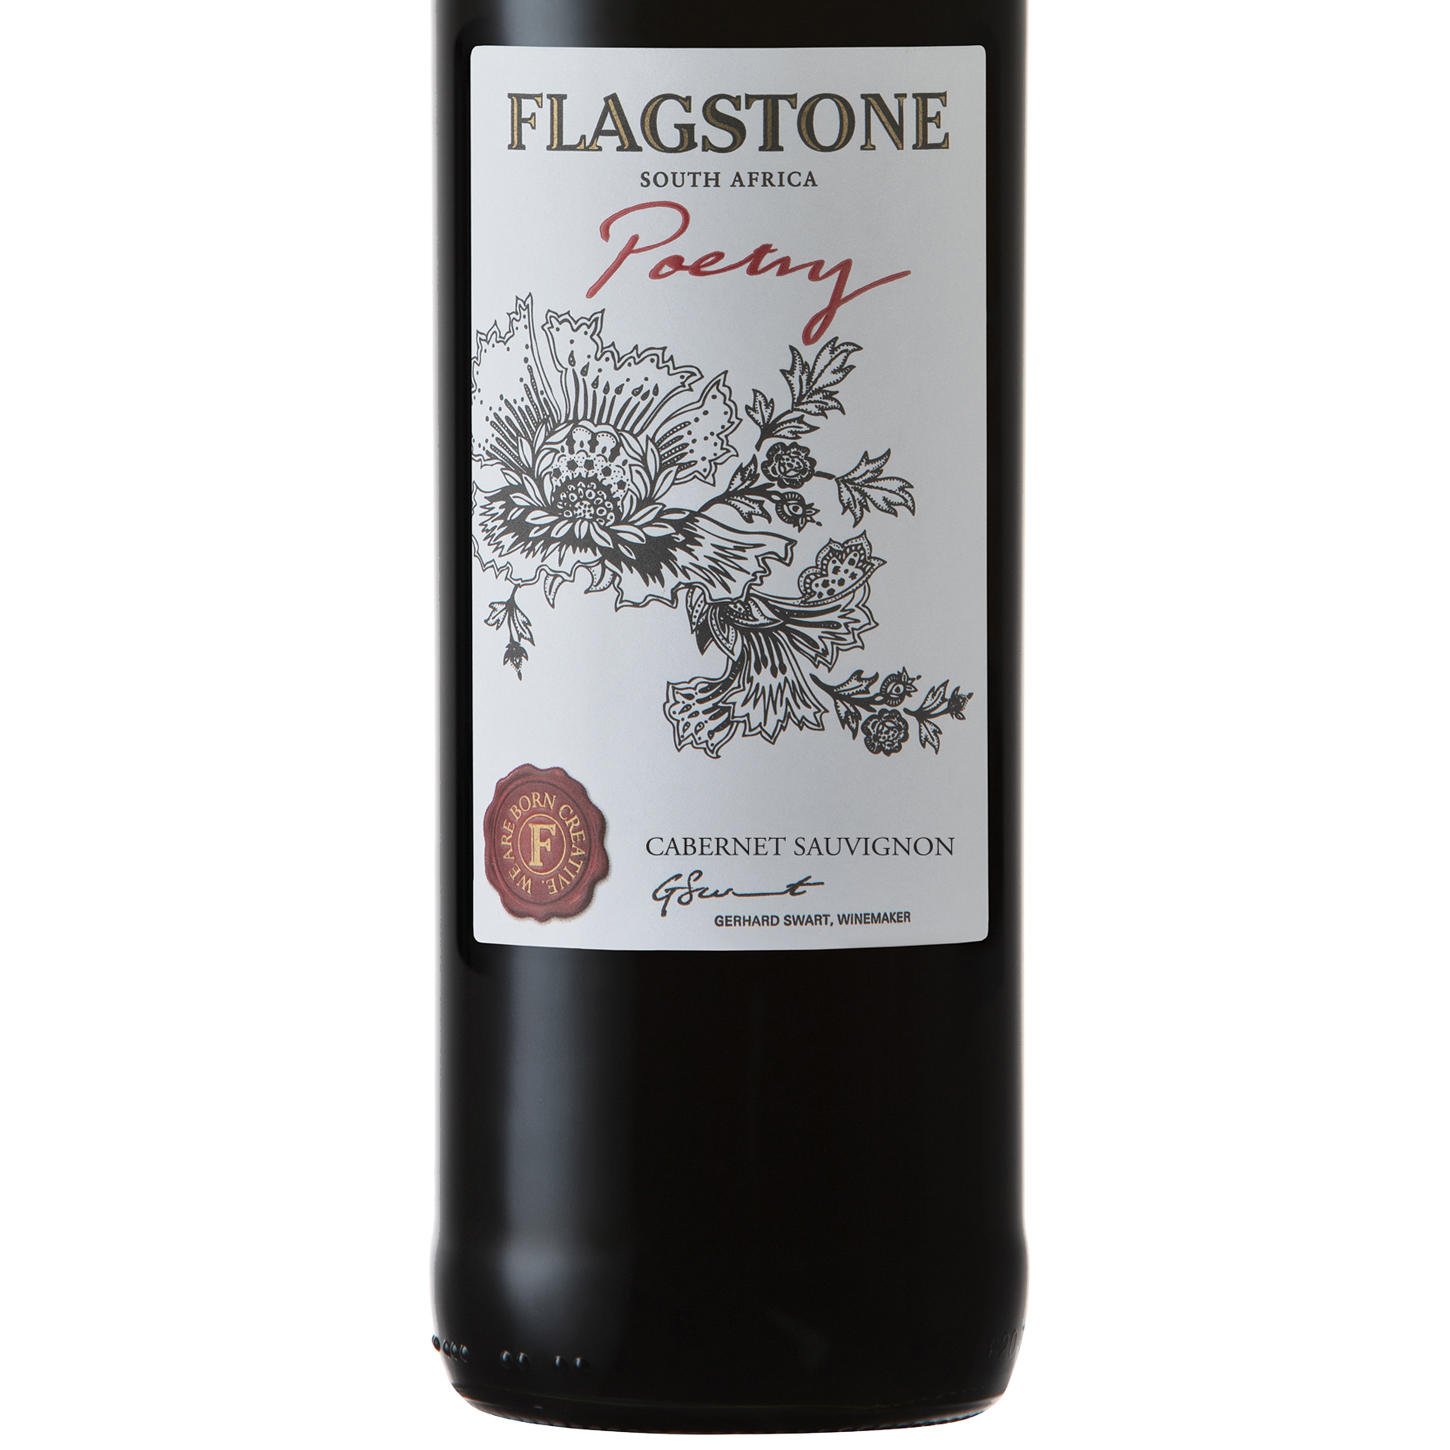 The Wine Kenya | Poetry Flagstone Cabernet Shop Sauvignon